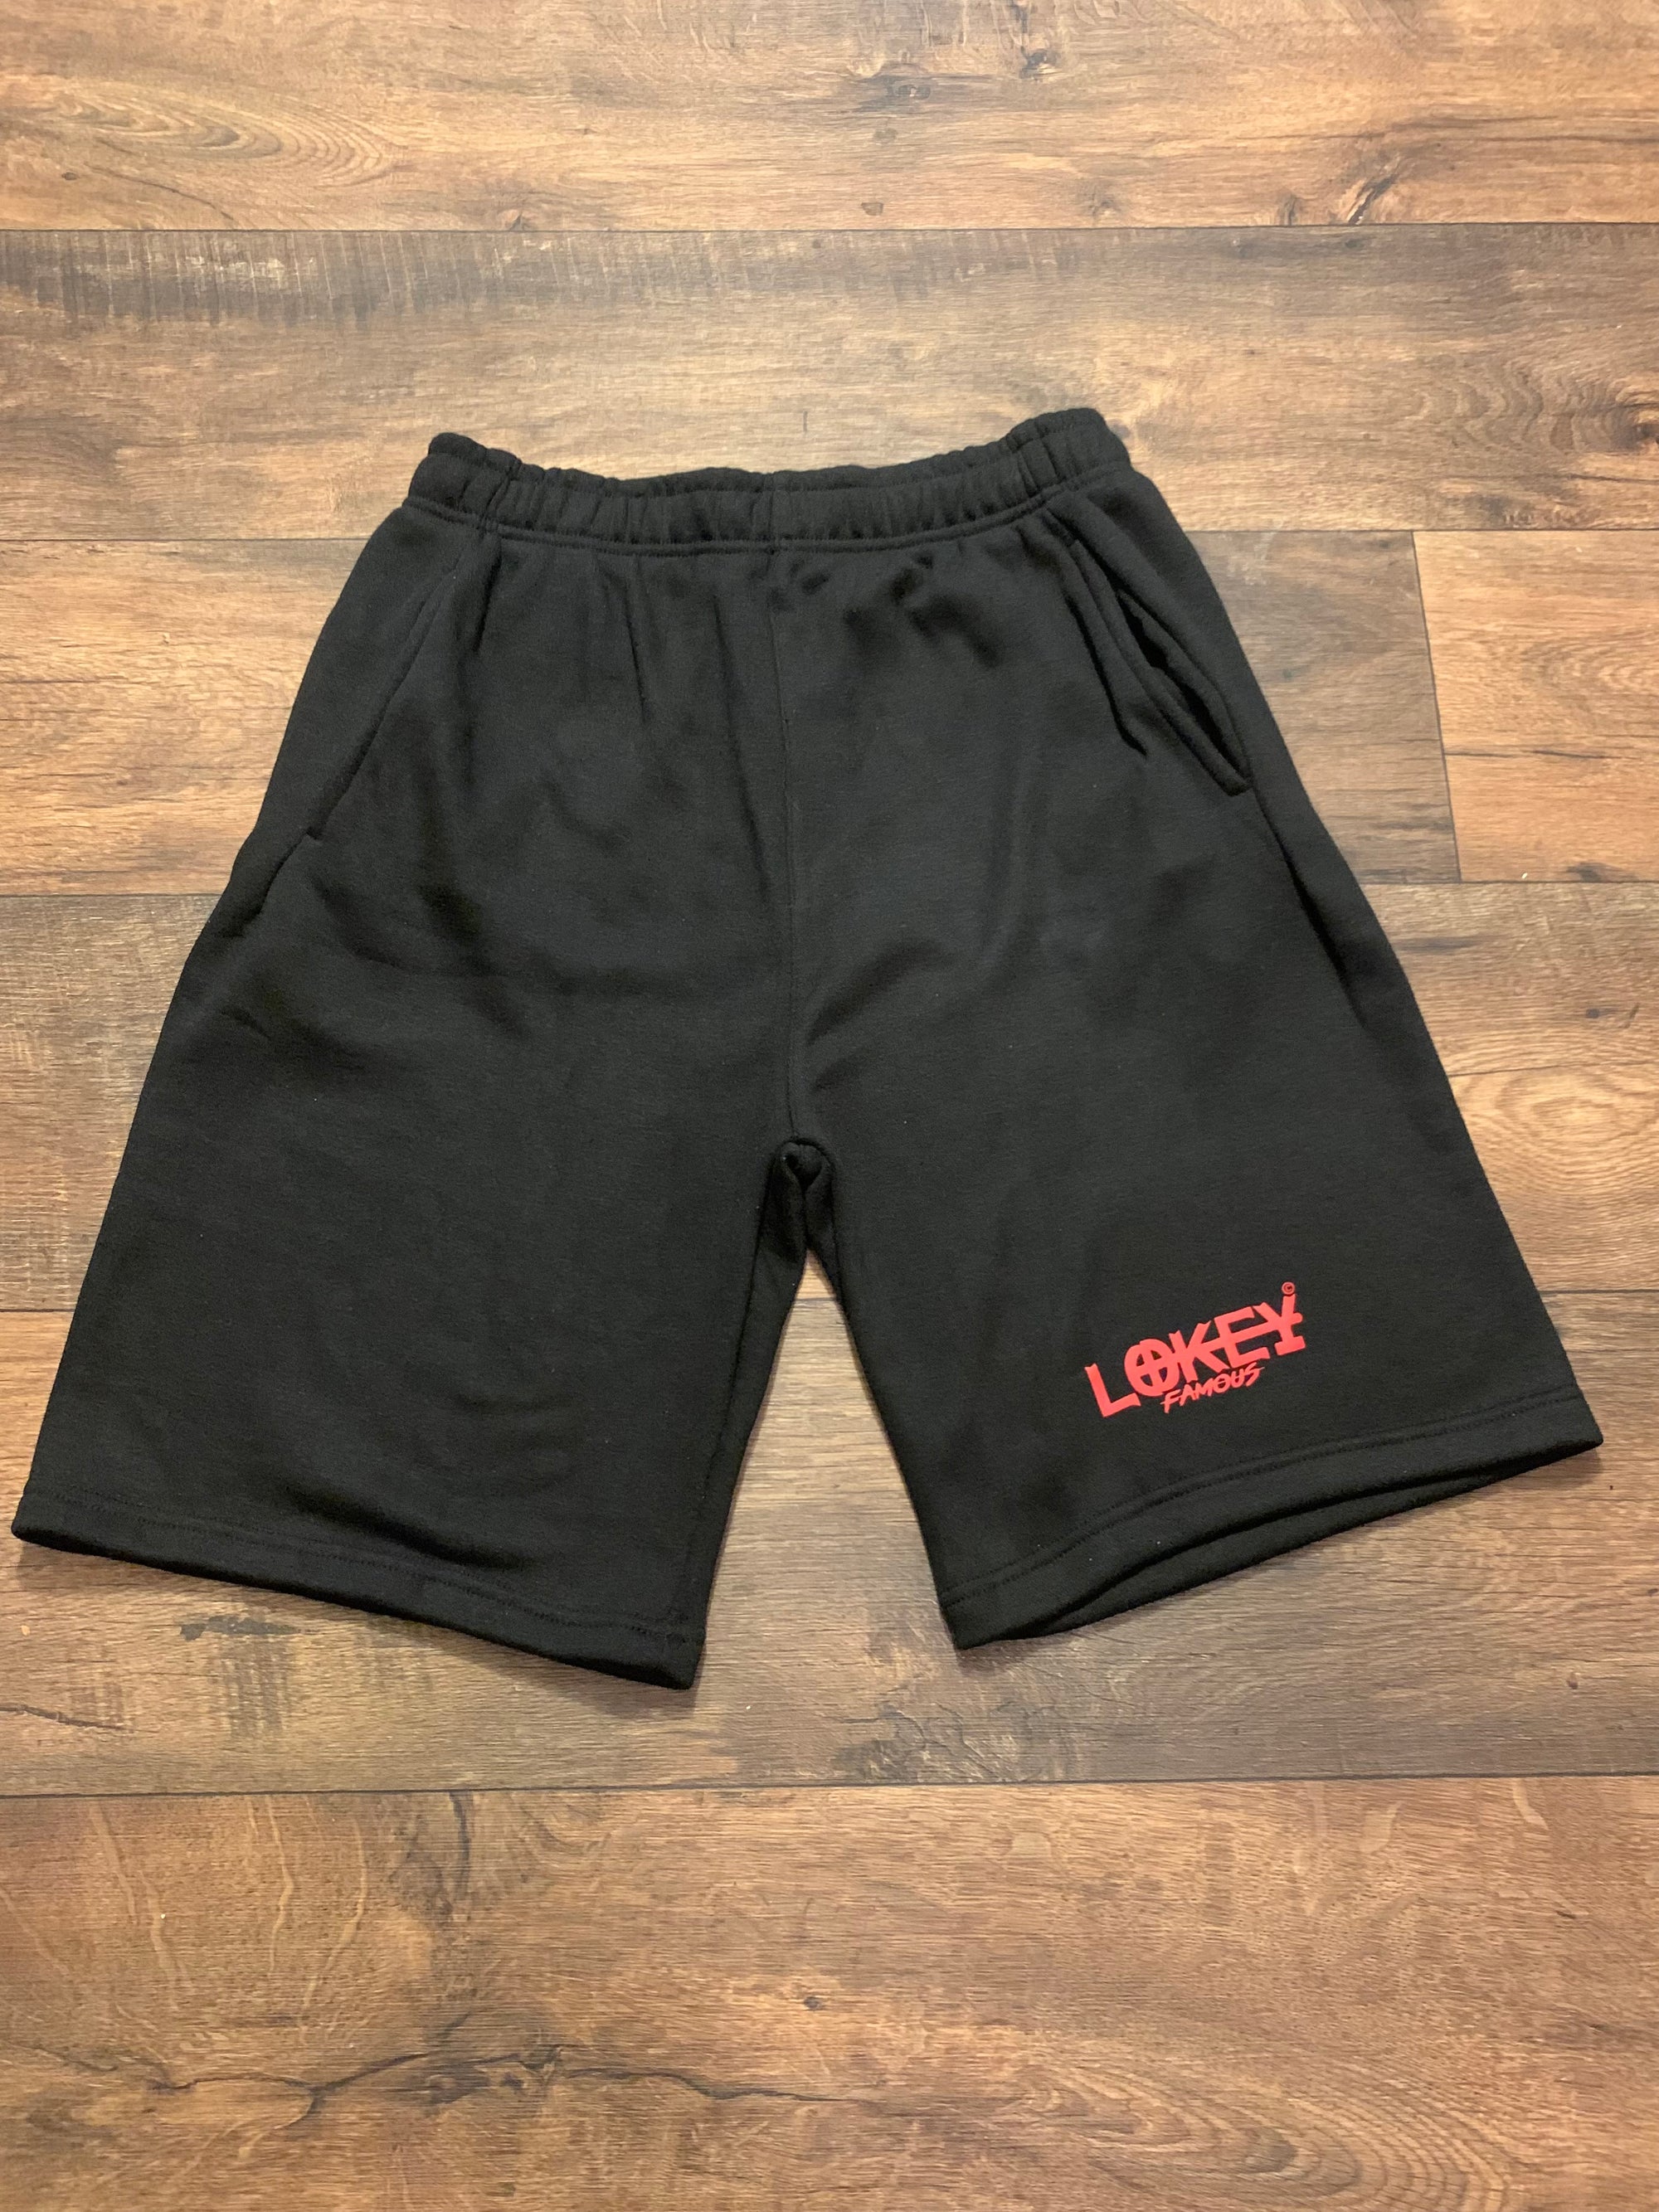 LF black shorts w/red logo